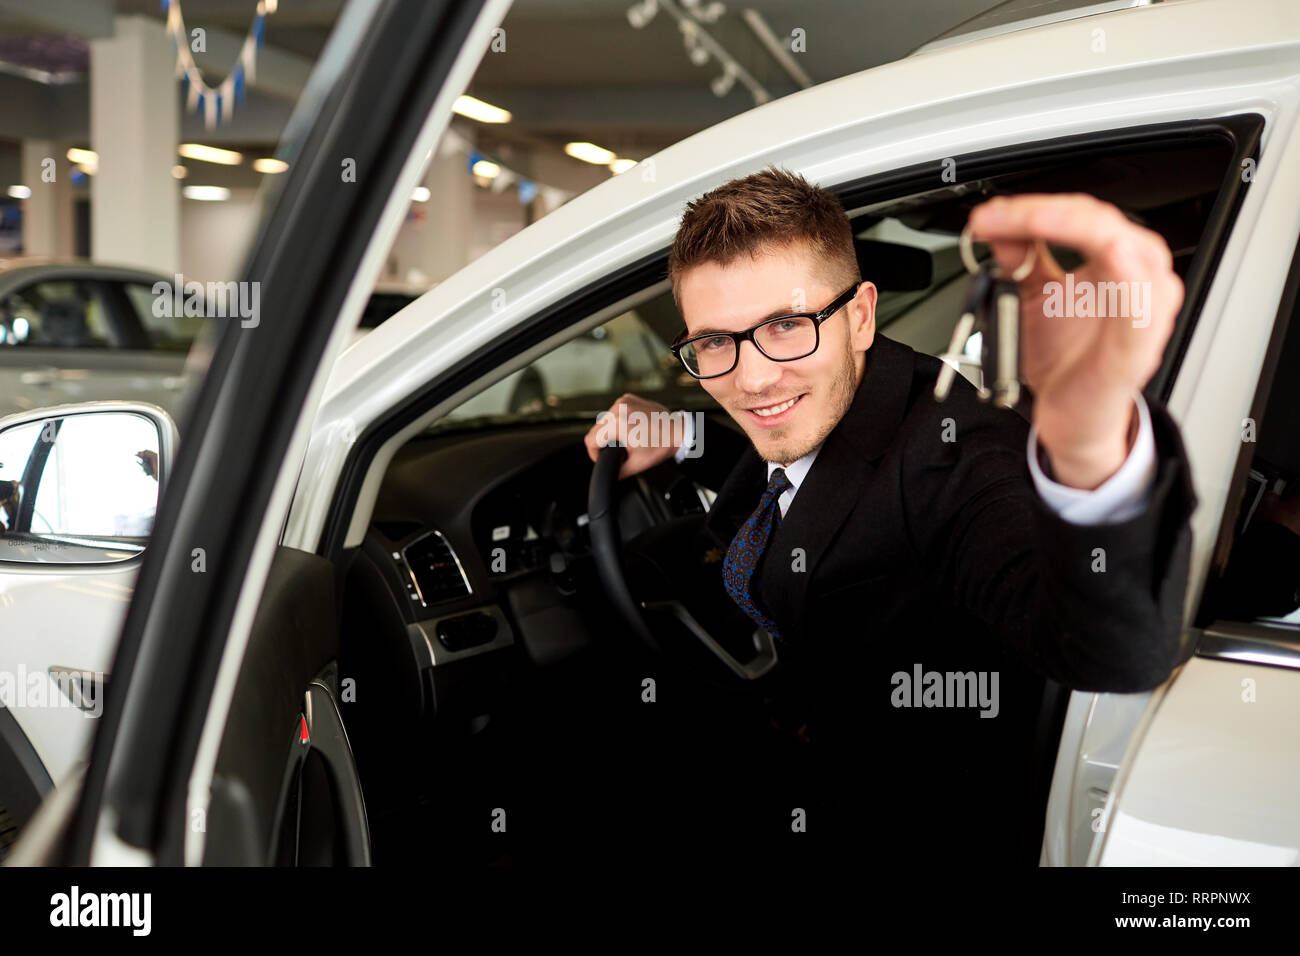 Salesman smiling holds car keys in car. Stock Photo